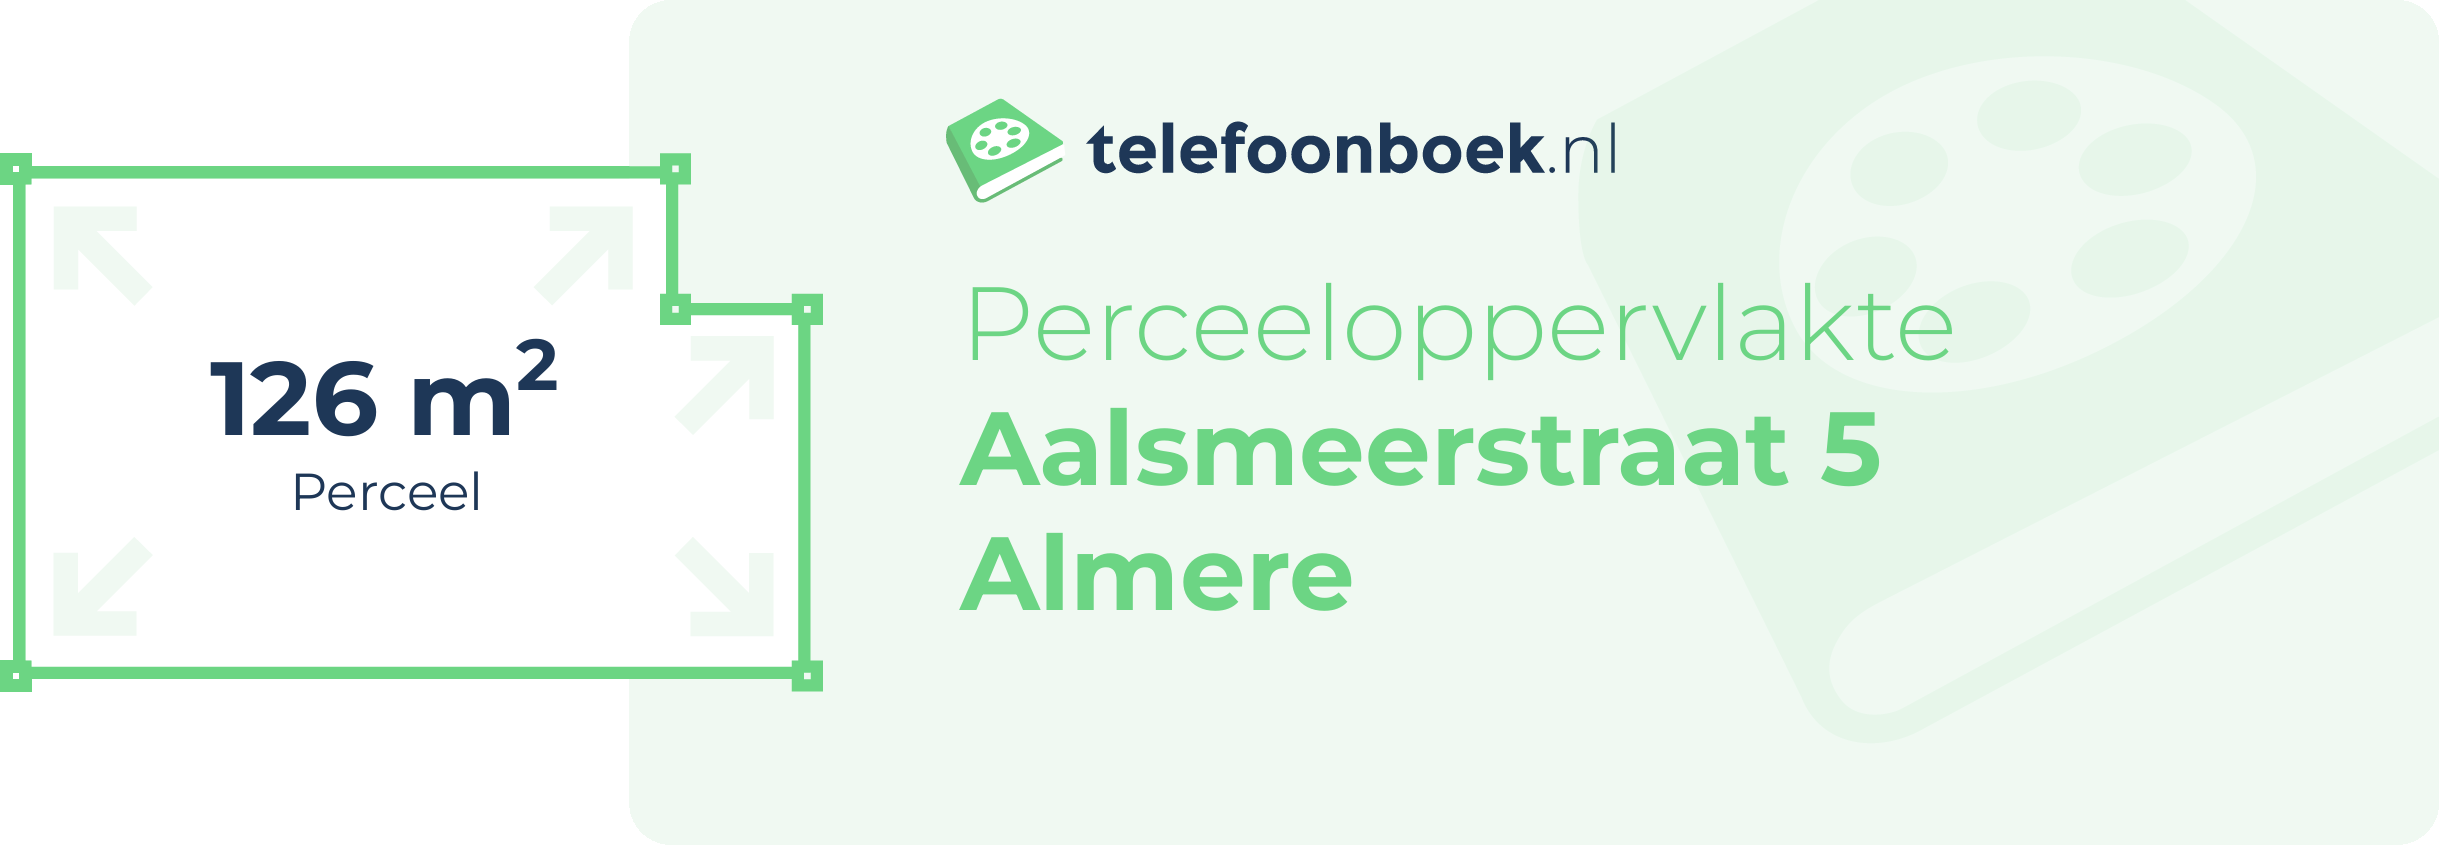 Perceeloppervlakte Aalsmeerstraat 5 Almere